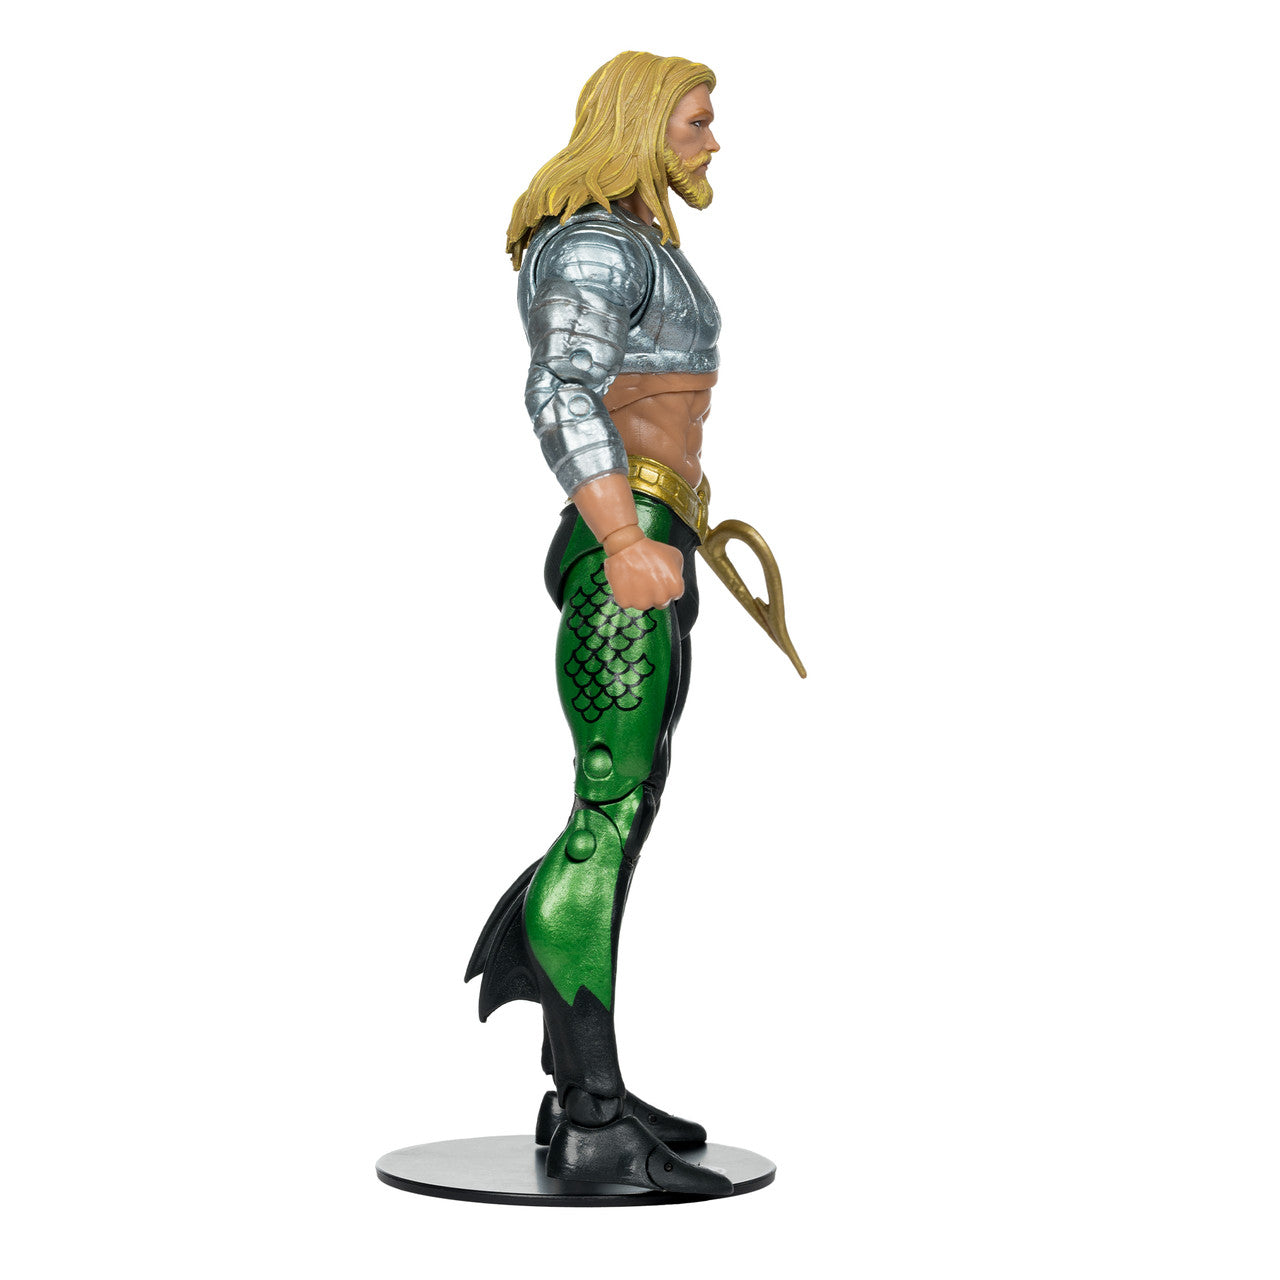 DC Multiverse Aquaman (JLA) Build-A-Figure